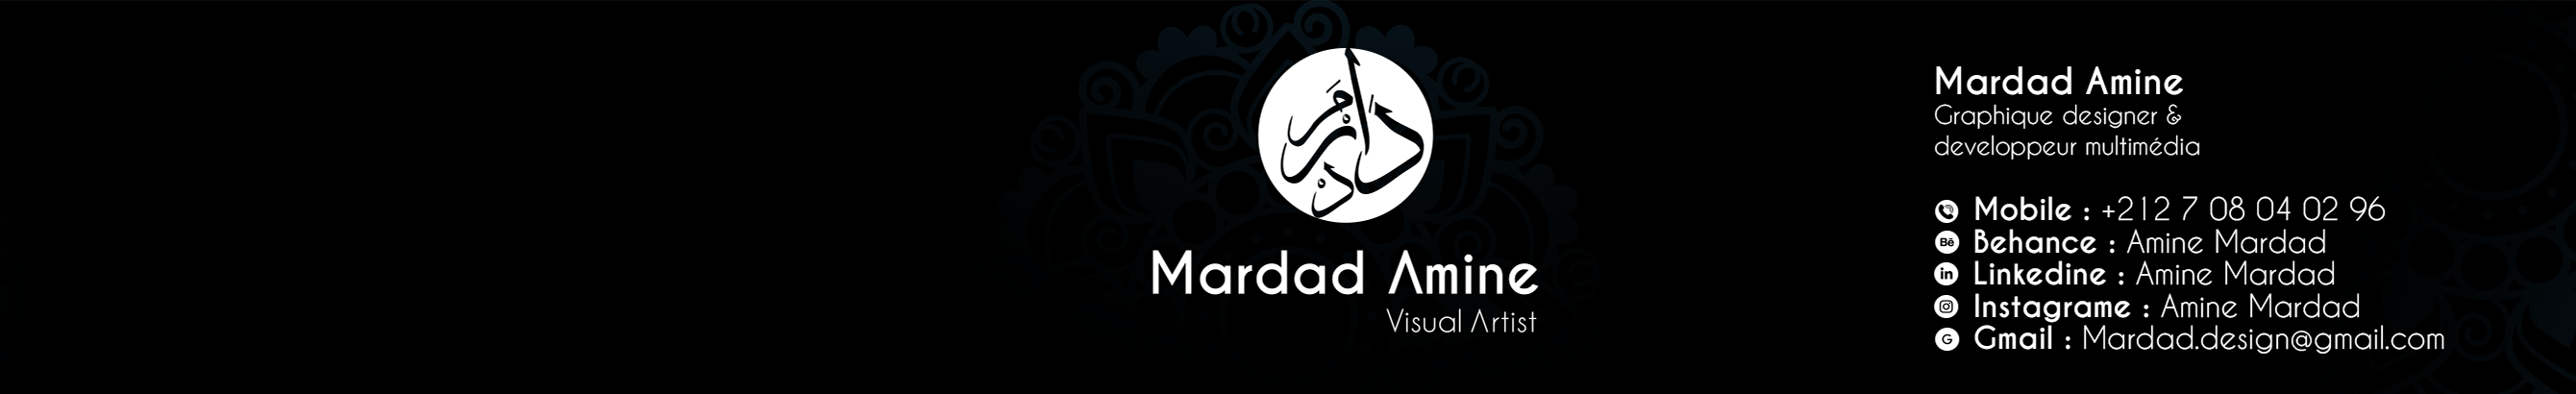 Amine Mardad's profile banner